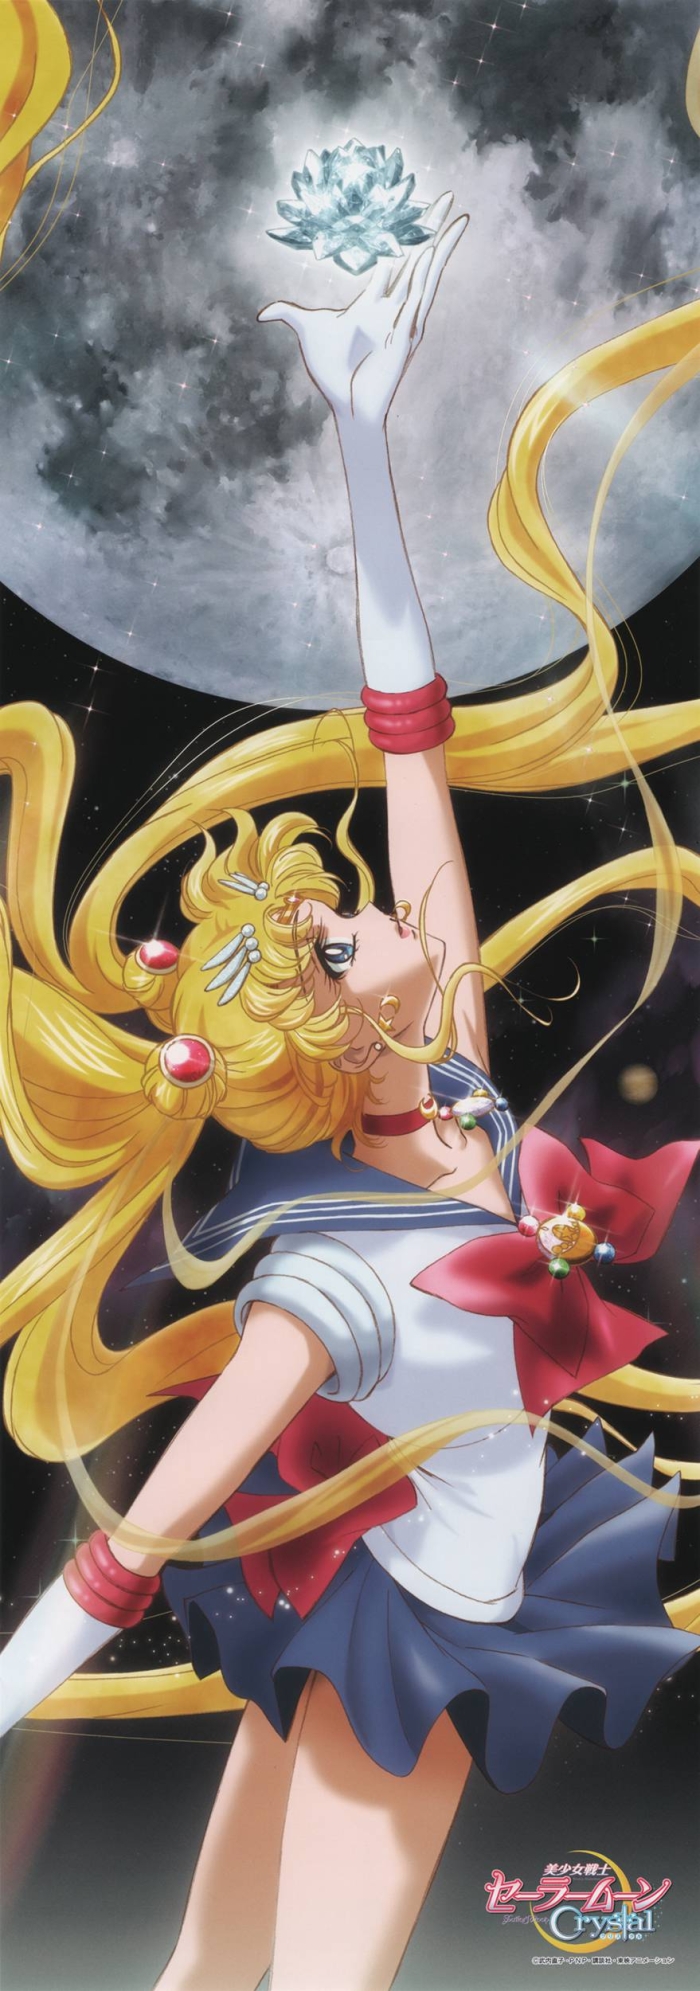 Pendeja Sailor Moon Crystal   Chara Pos Collection Mini Posters - Sailor Moon Juggs